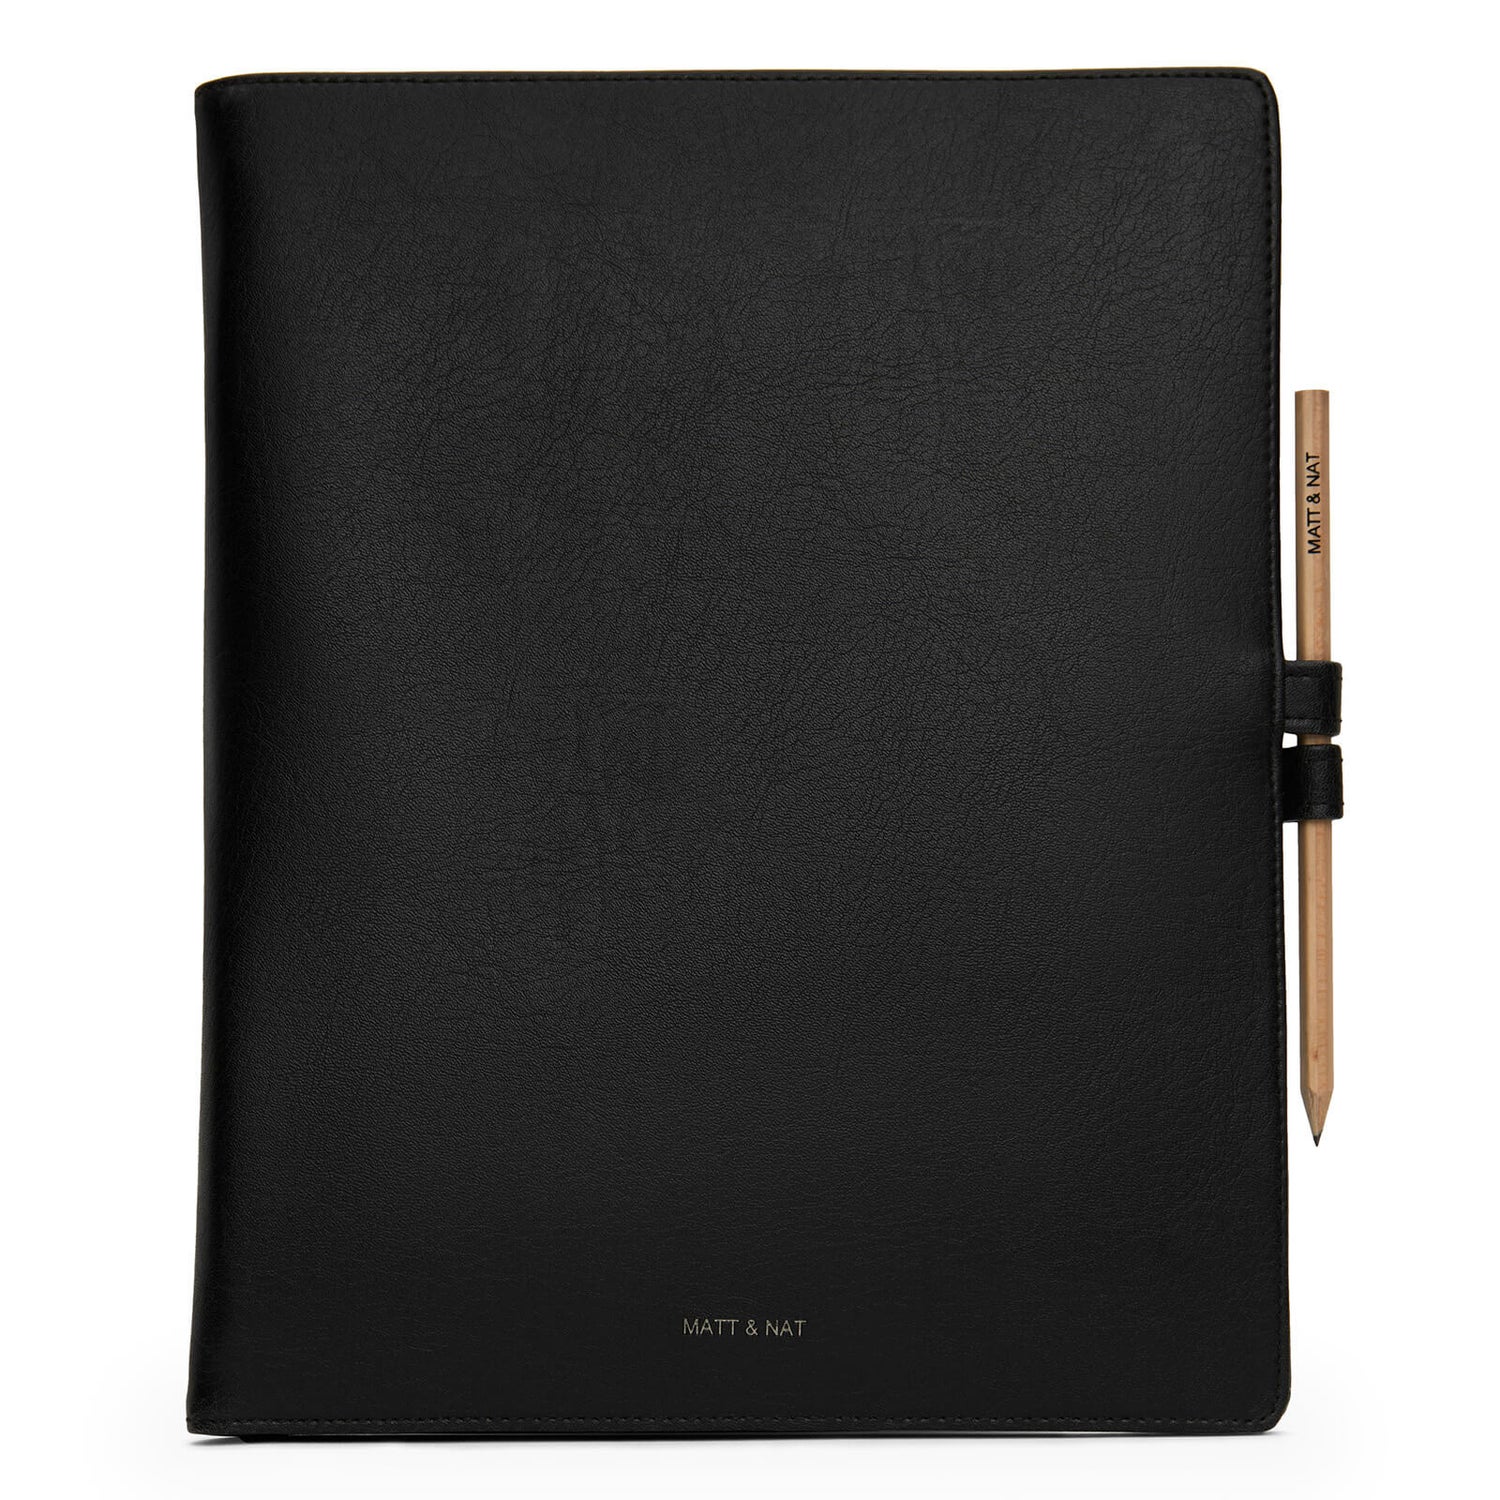 Matt & Nat Magistral Notebook and Pen - Black